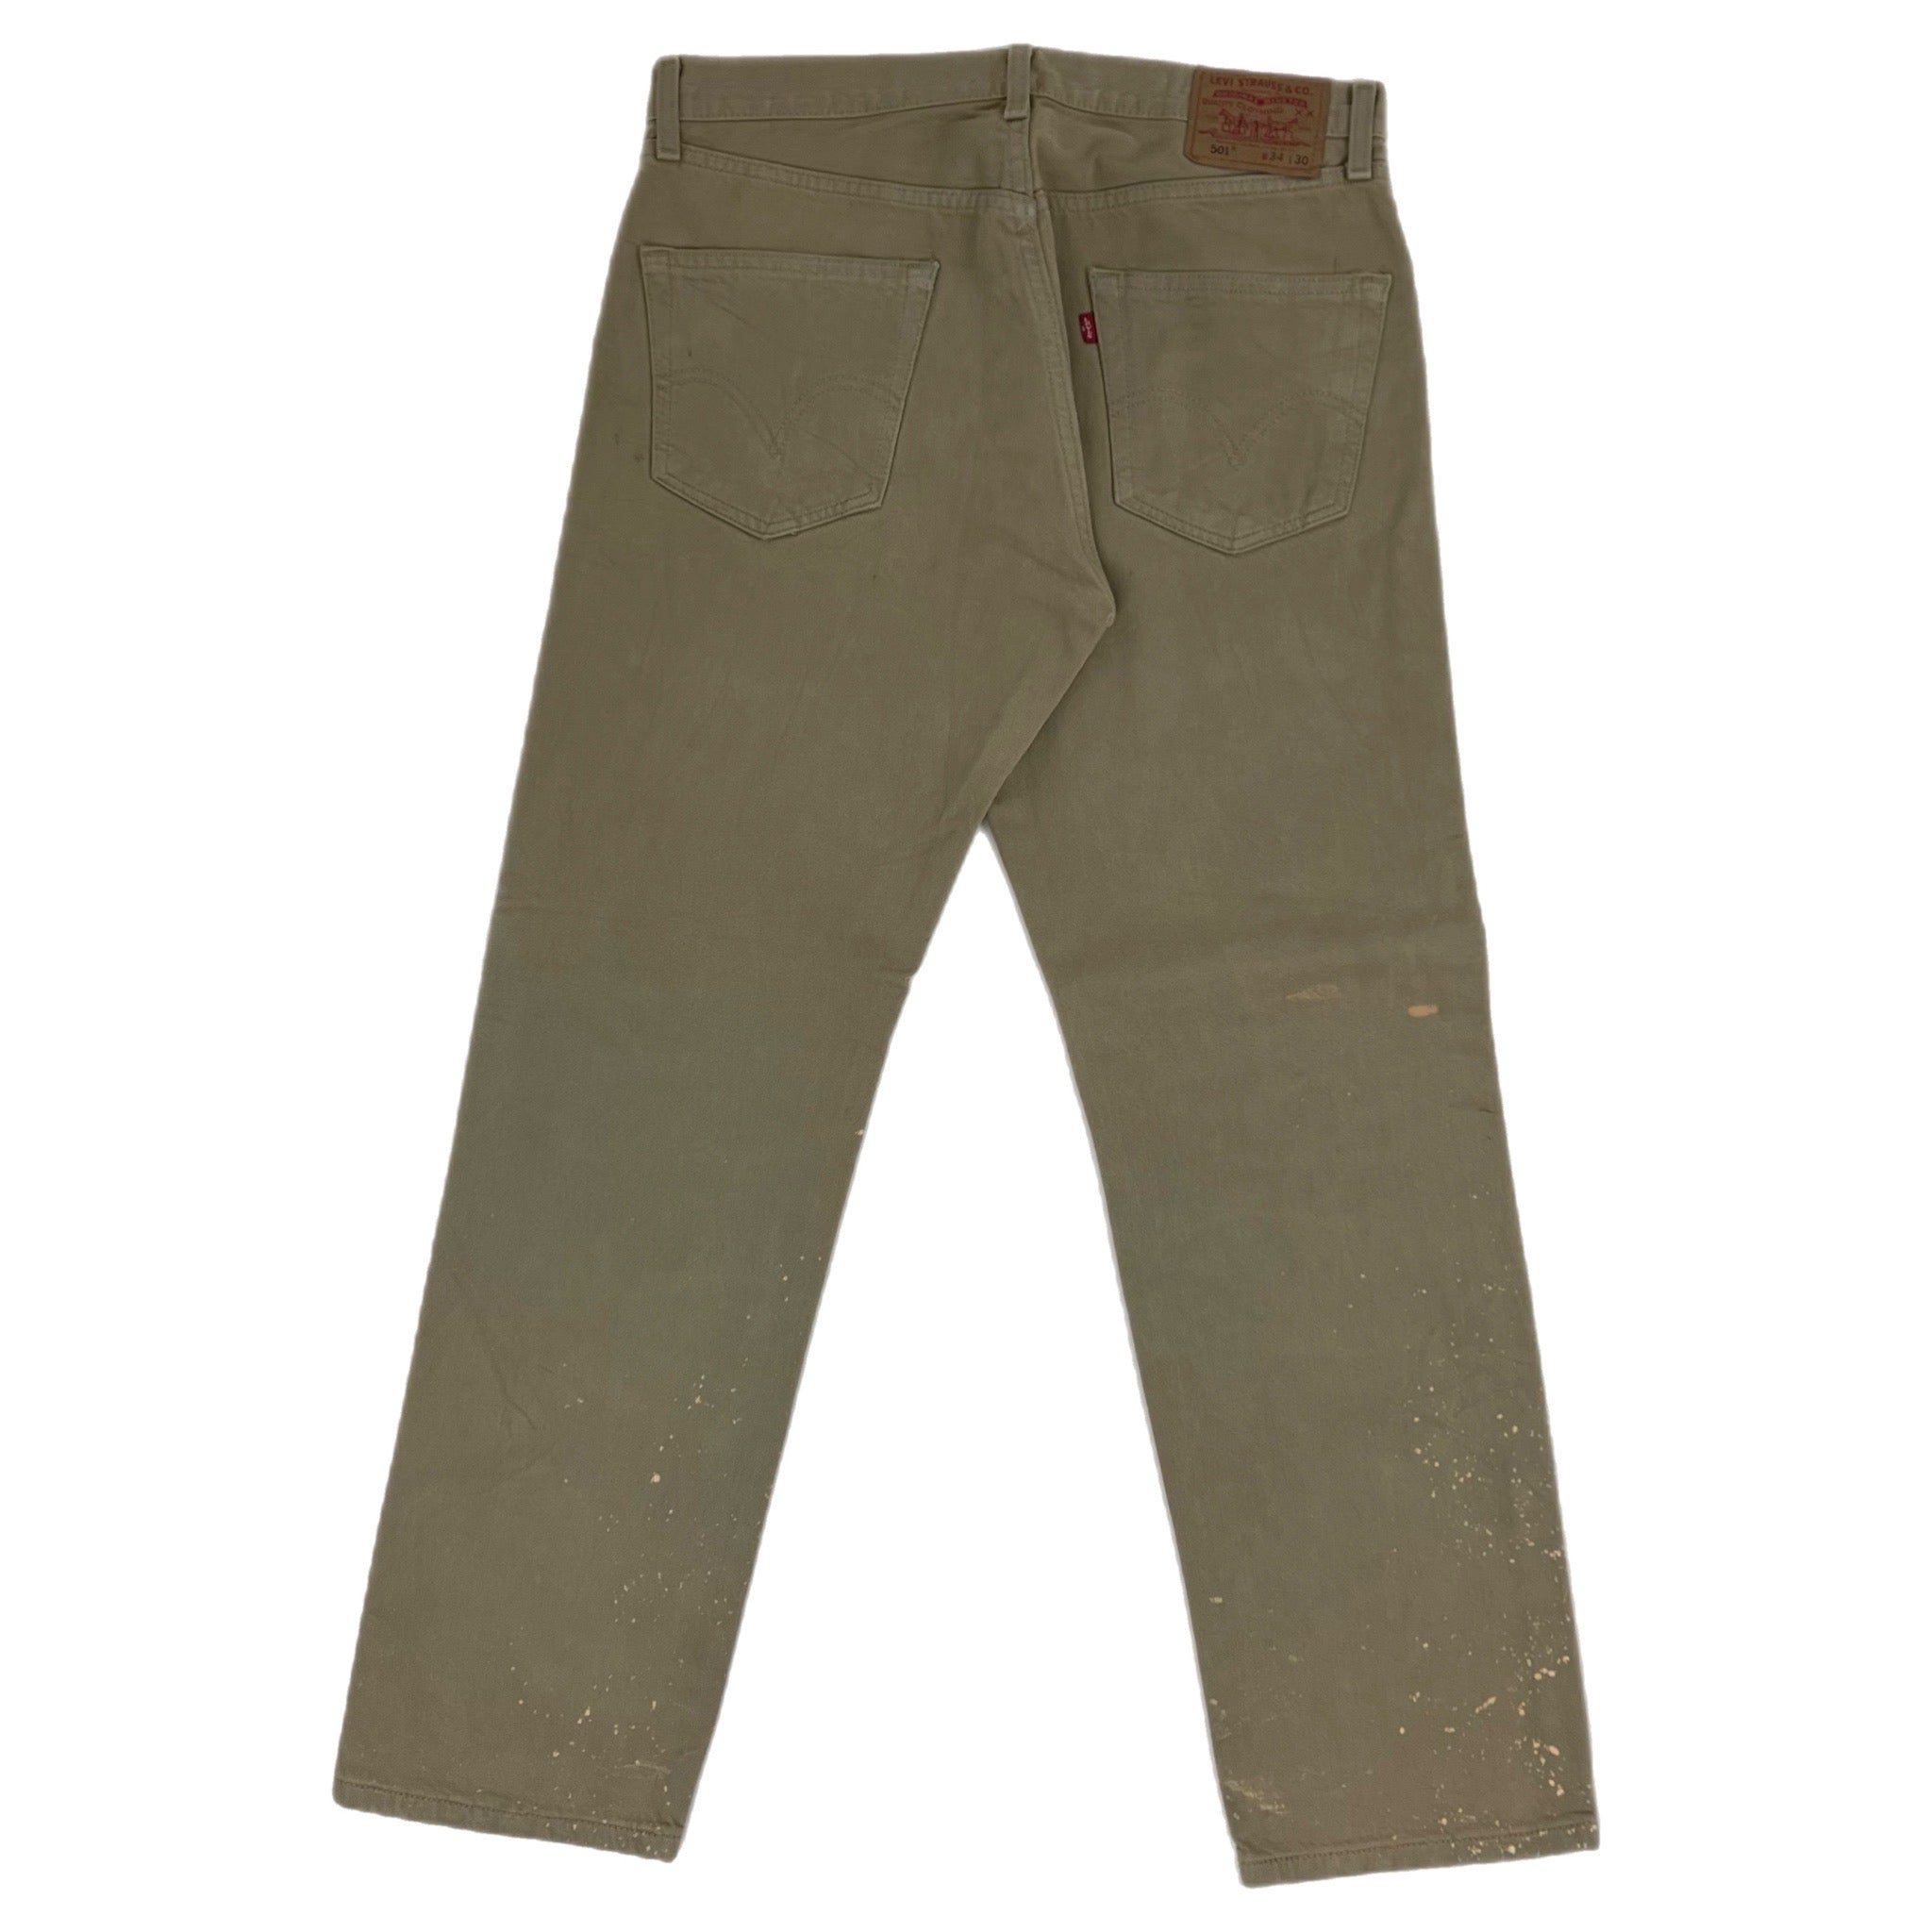 Vintage Levi’s 501 Tan Pants